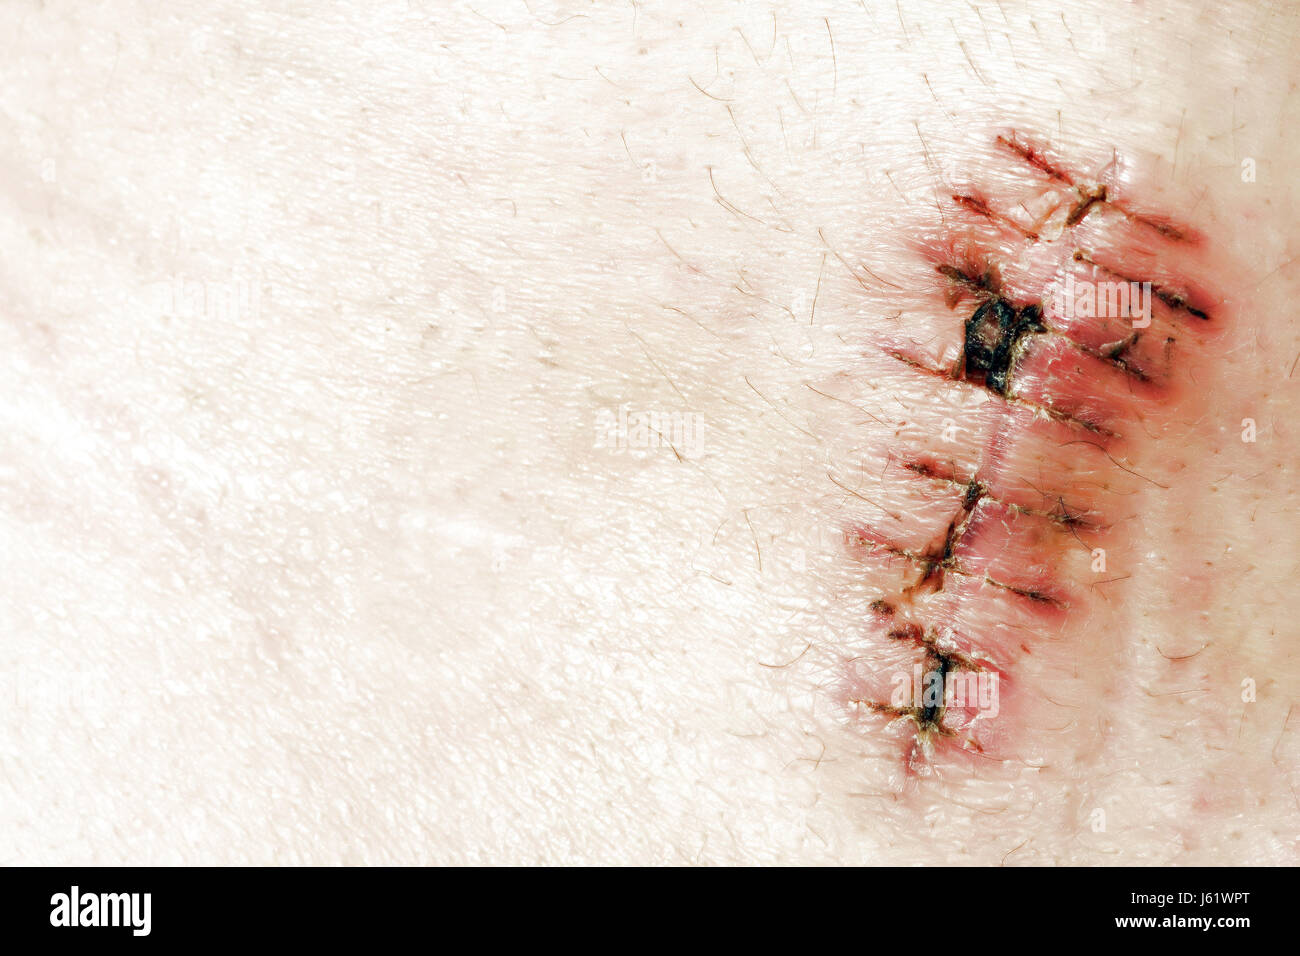 medicinally medical skin pain wound injury scar surgery heal close health Stock Photo